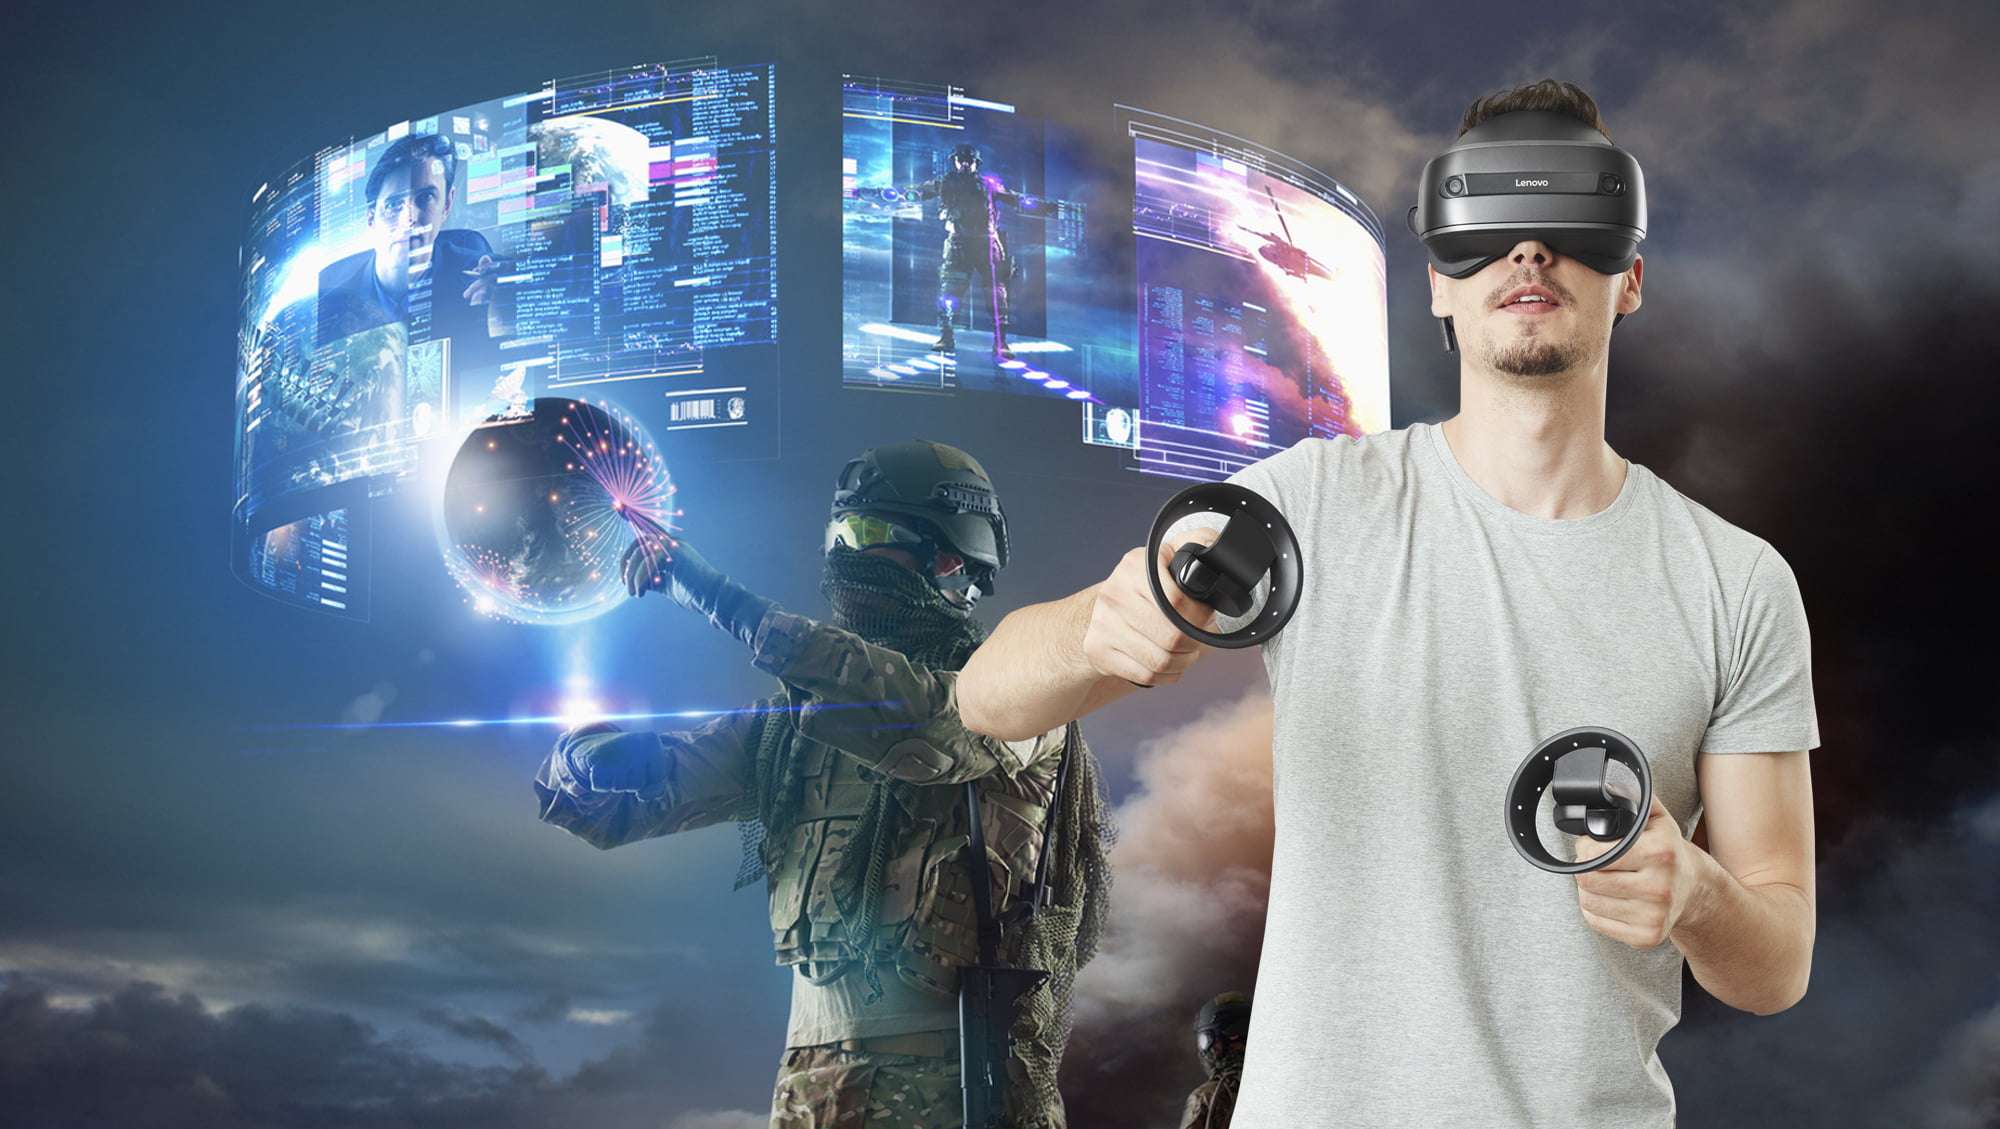 O vr. Очки виртуальной реальности. Виртуальная реальность 2021. Игровая виртуальная реальность. Виртуальнаяяреальность.